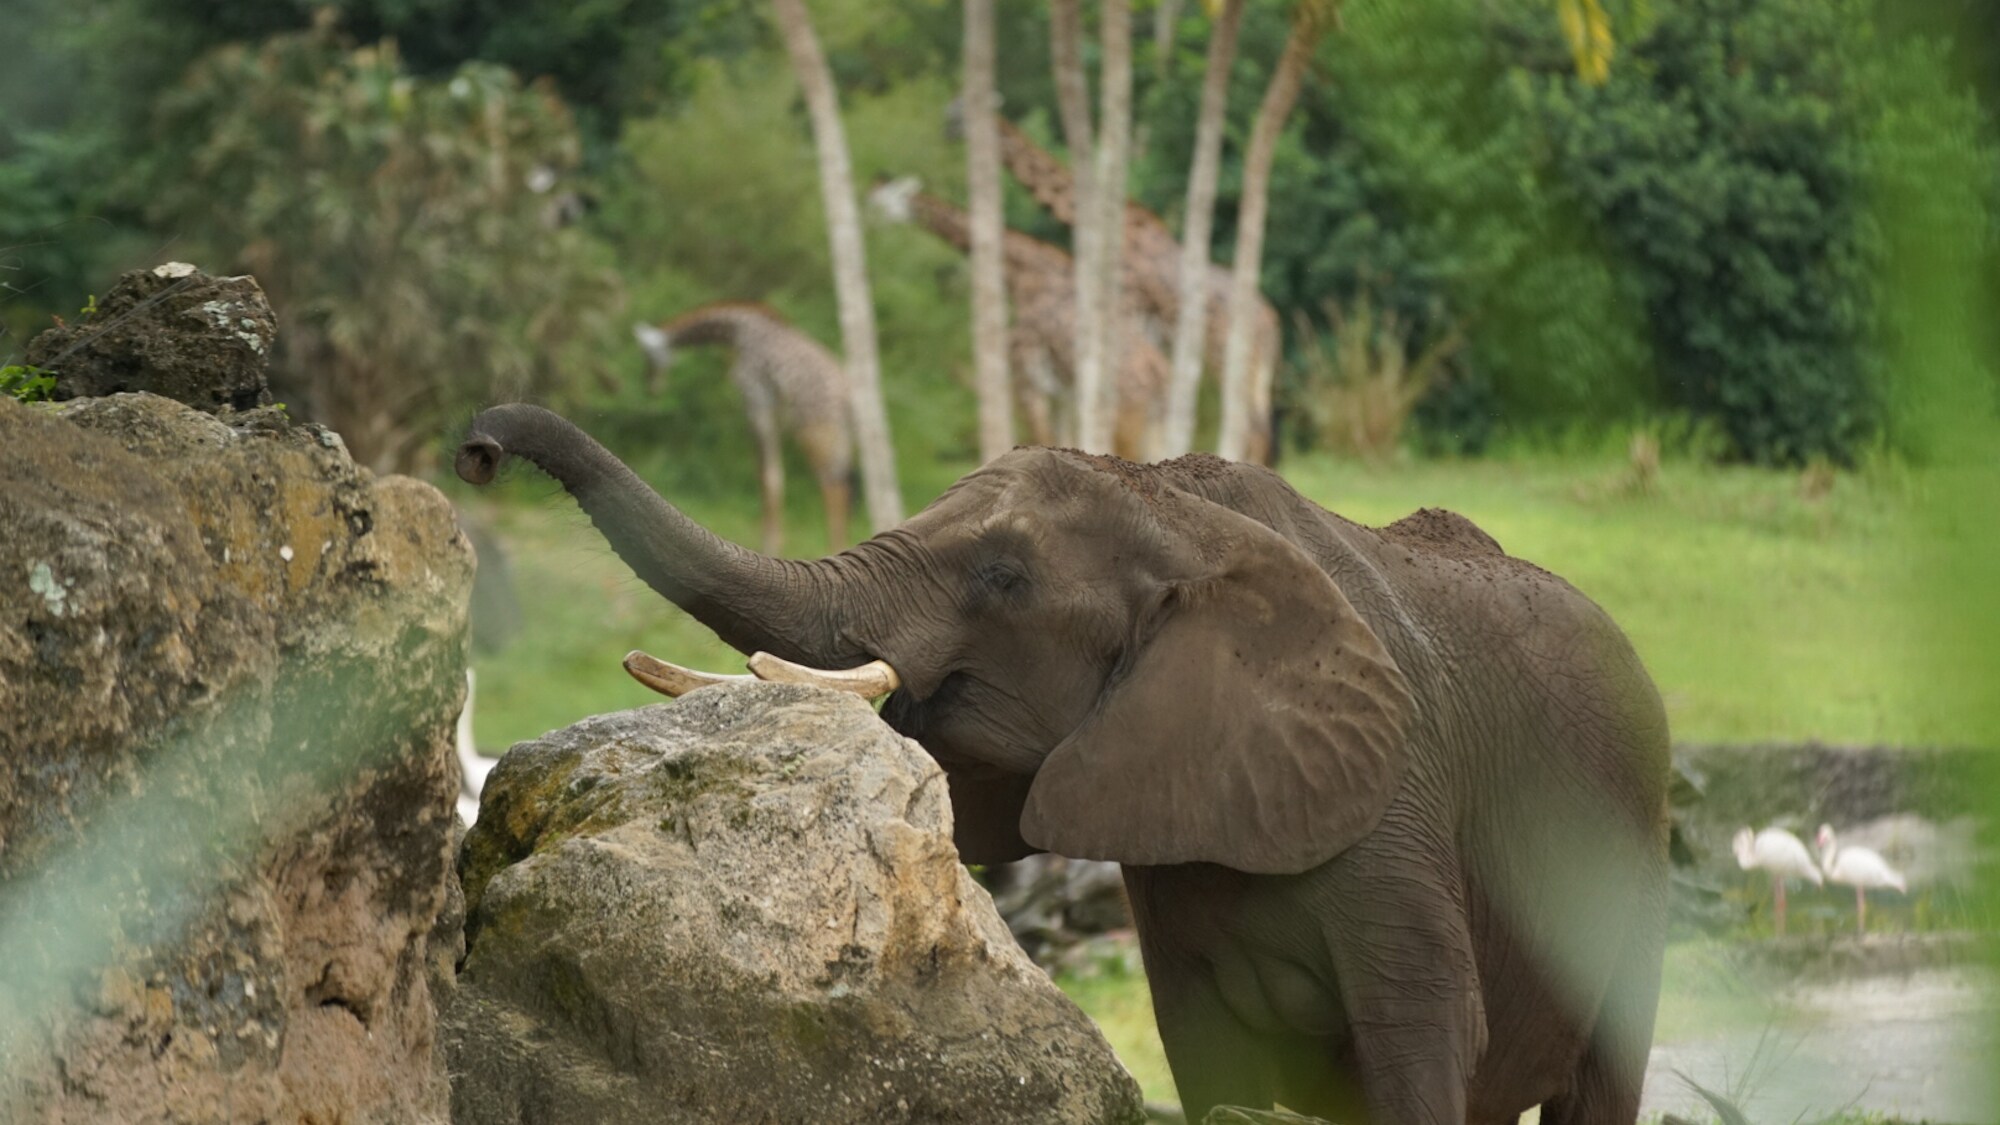 An African Elephant at the Kilimanjaro Safari. (Disney)